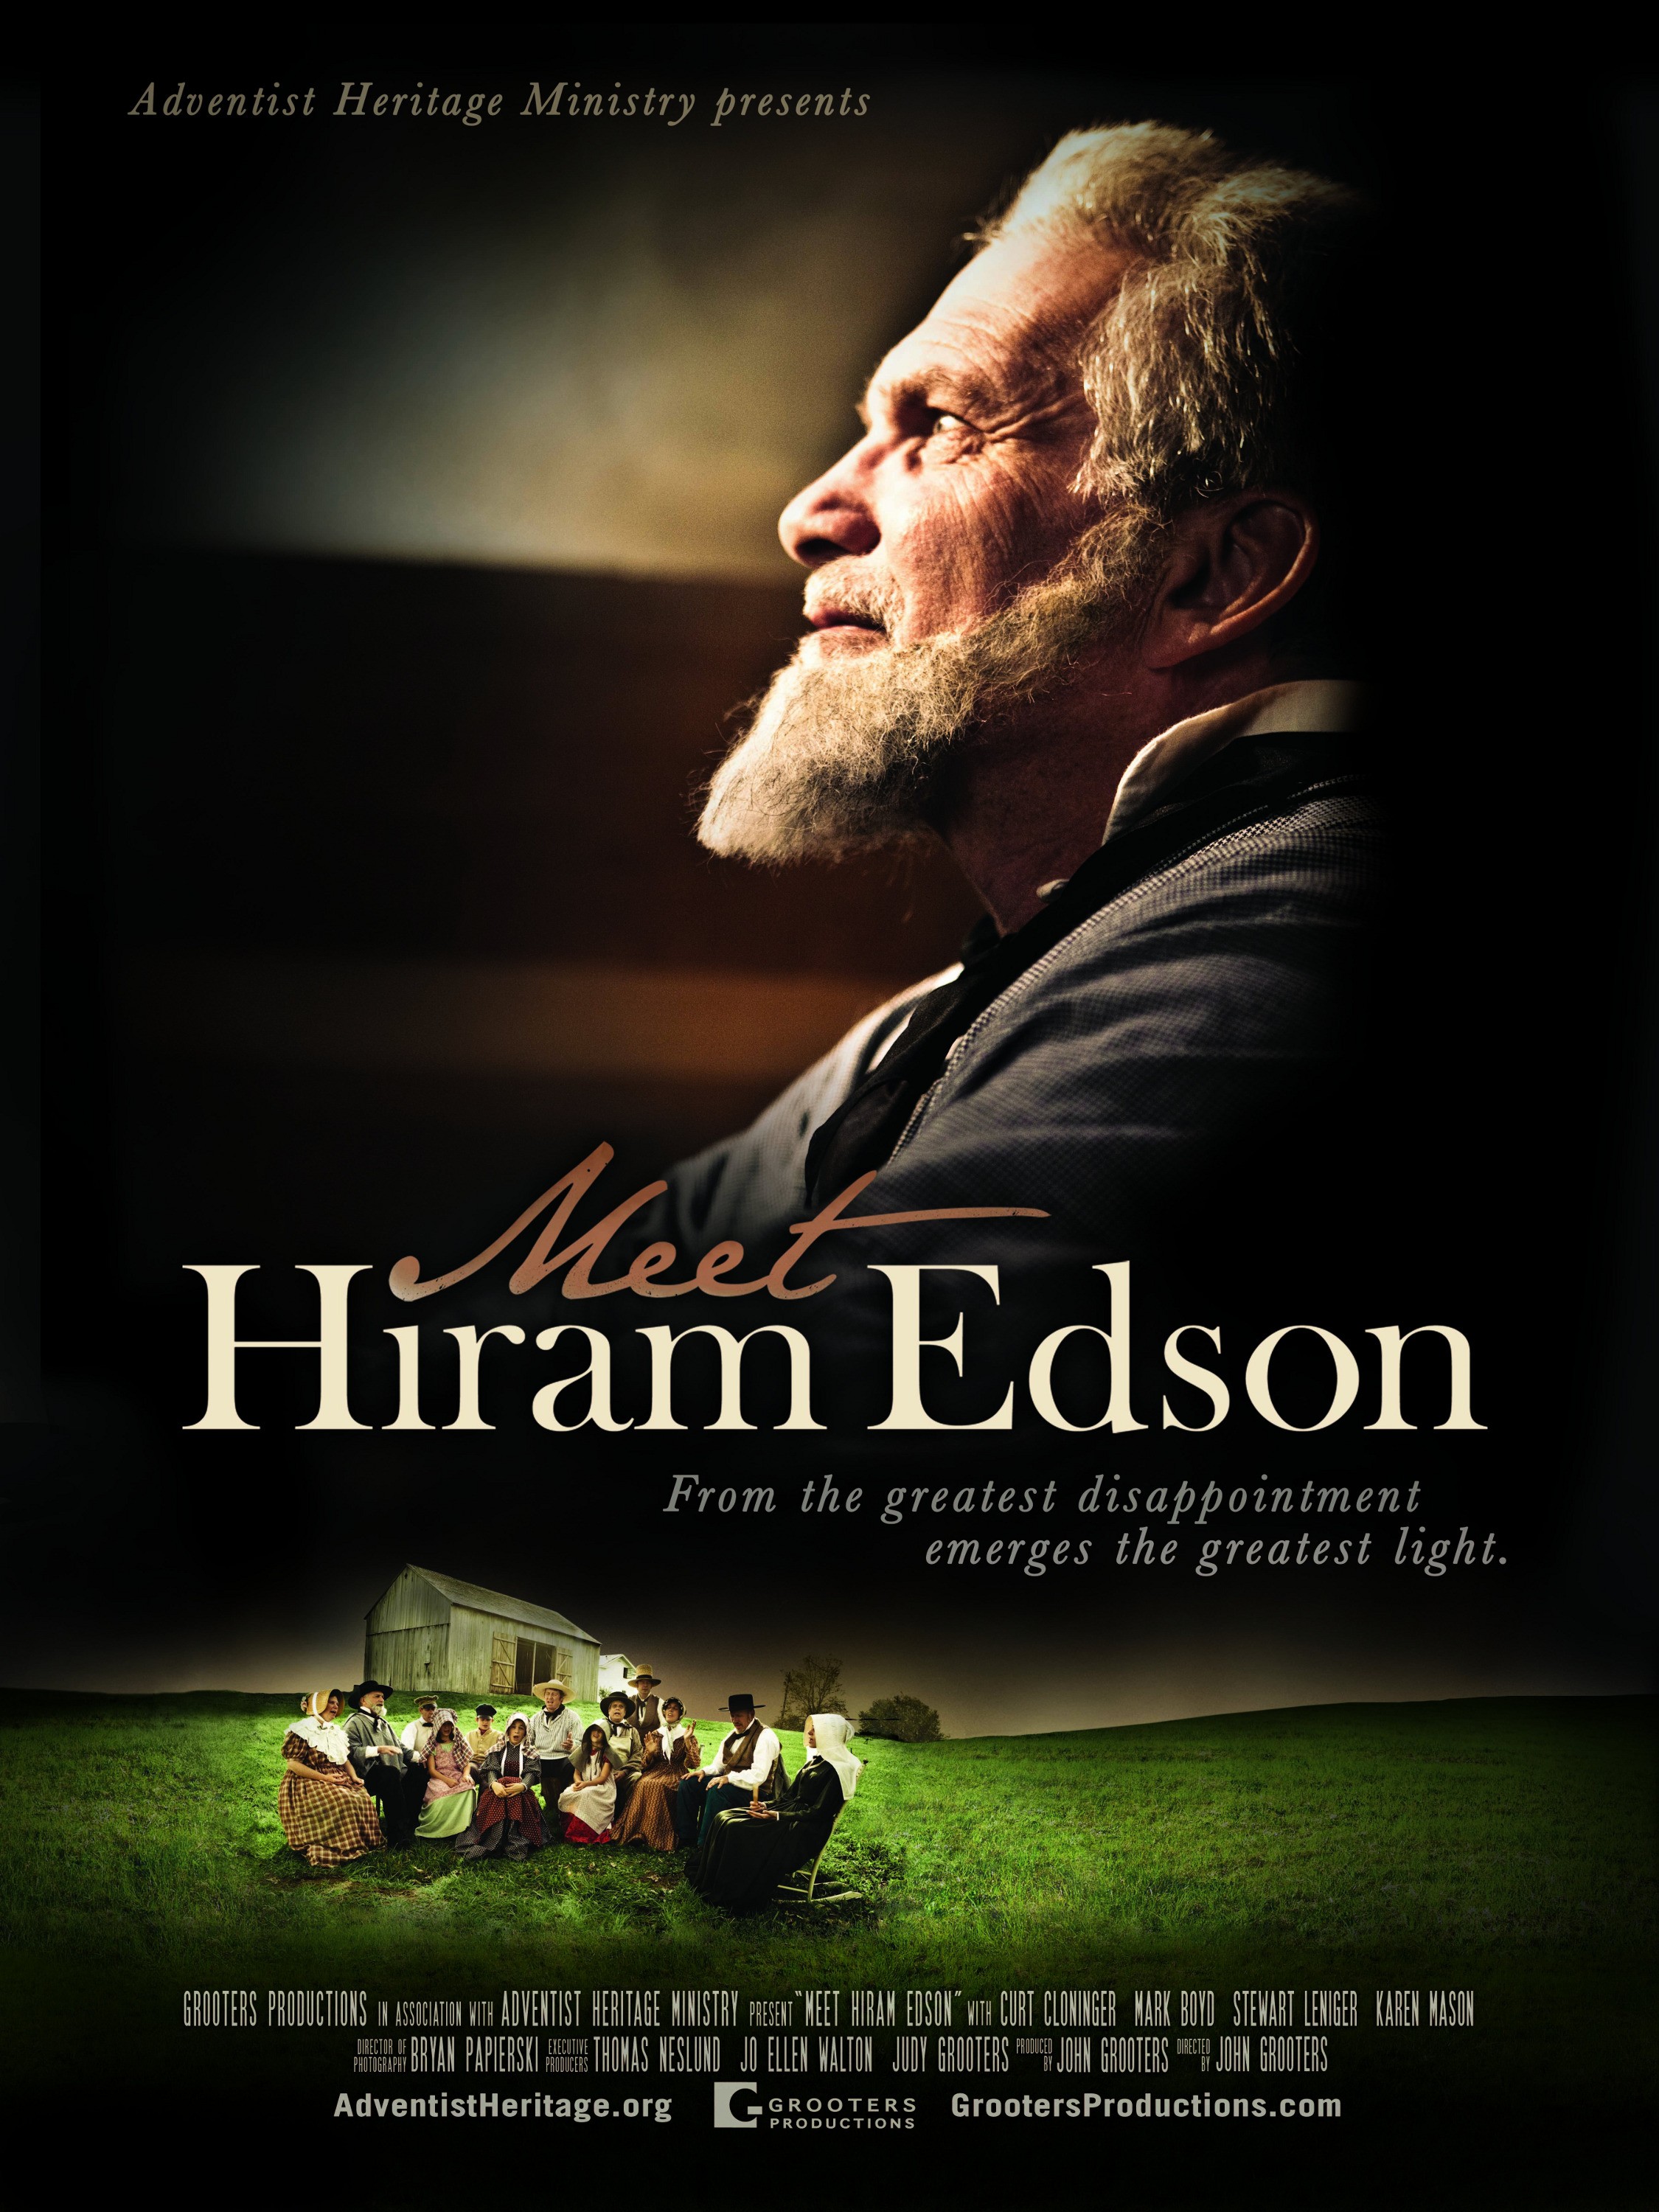 Mega Sized Movie Poster Image for Meet Hiram Edson